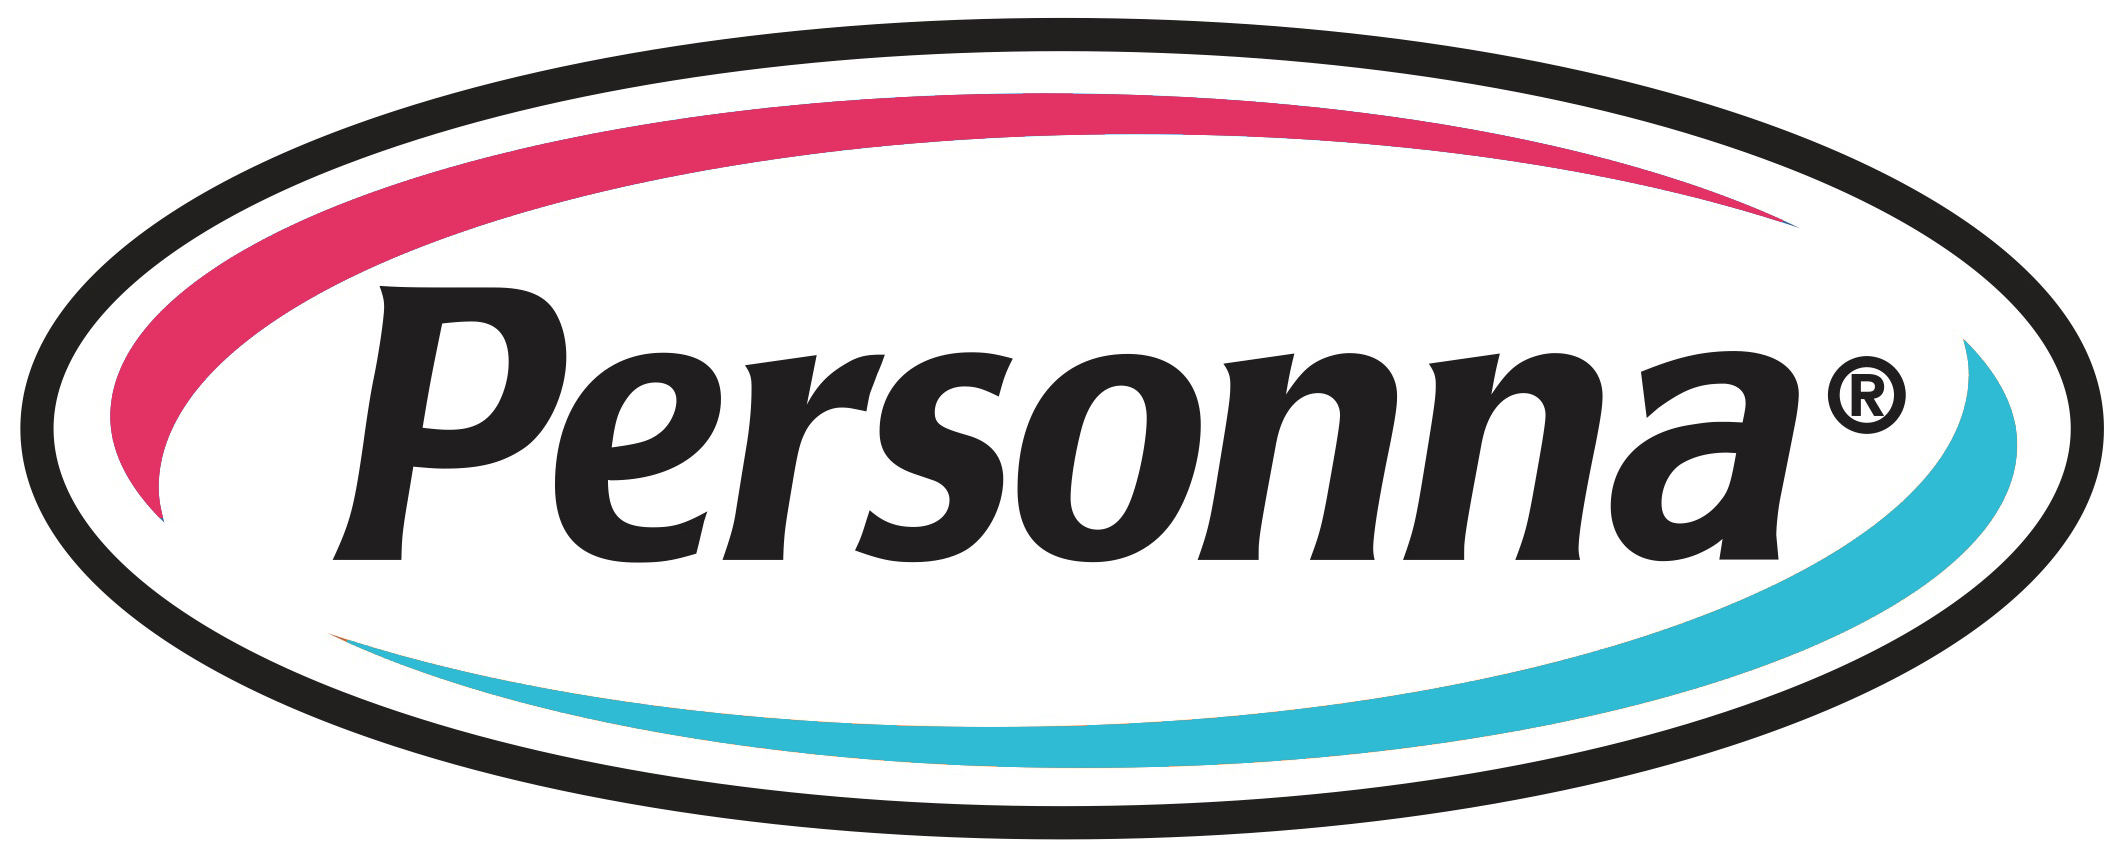 Personna-logo -لوگو پرسونا